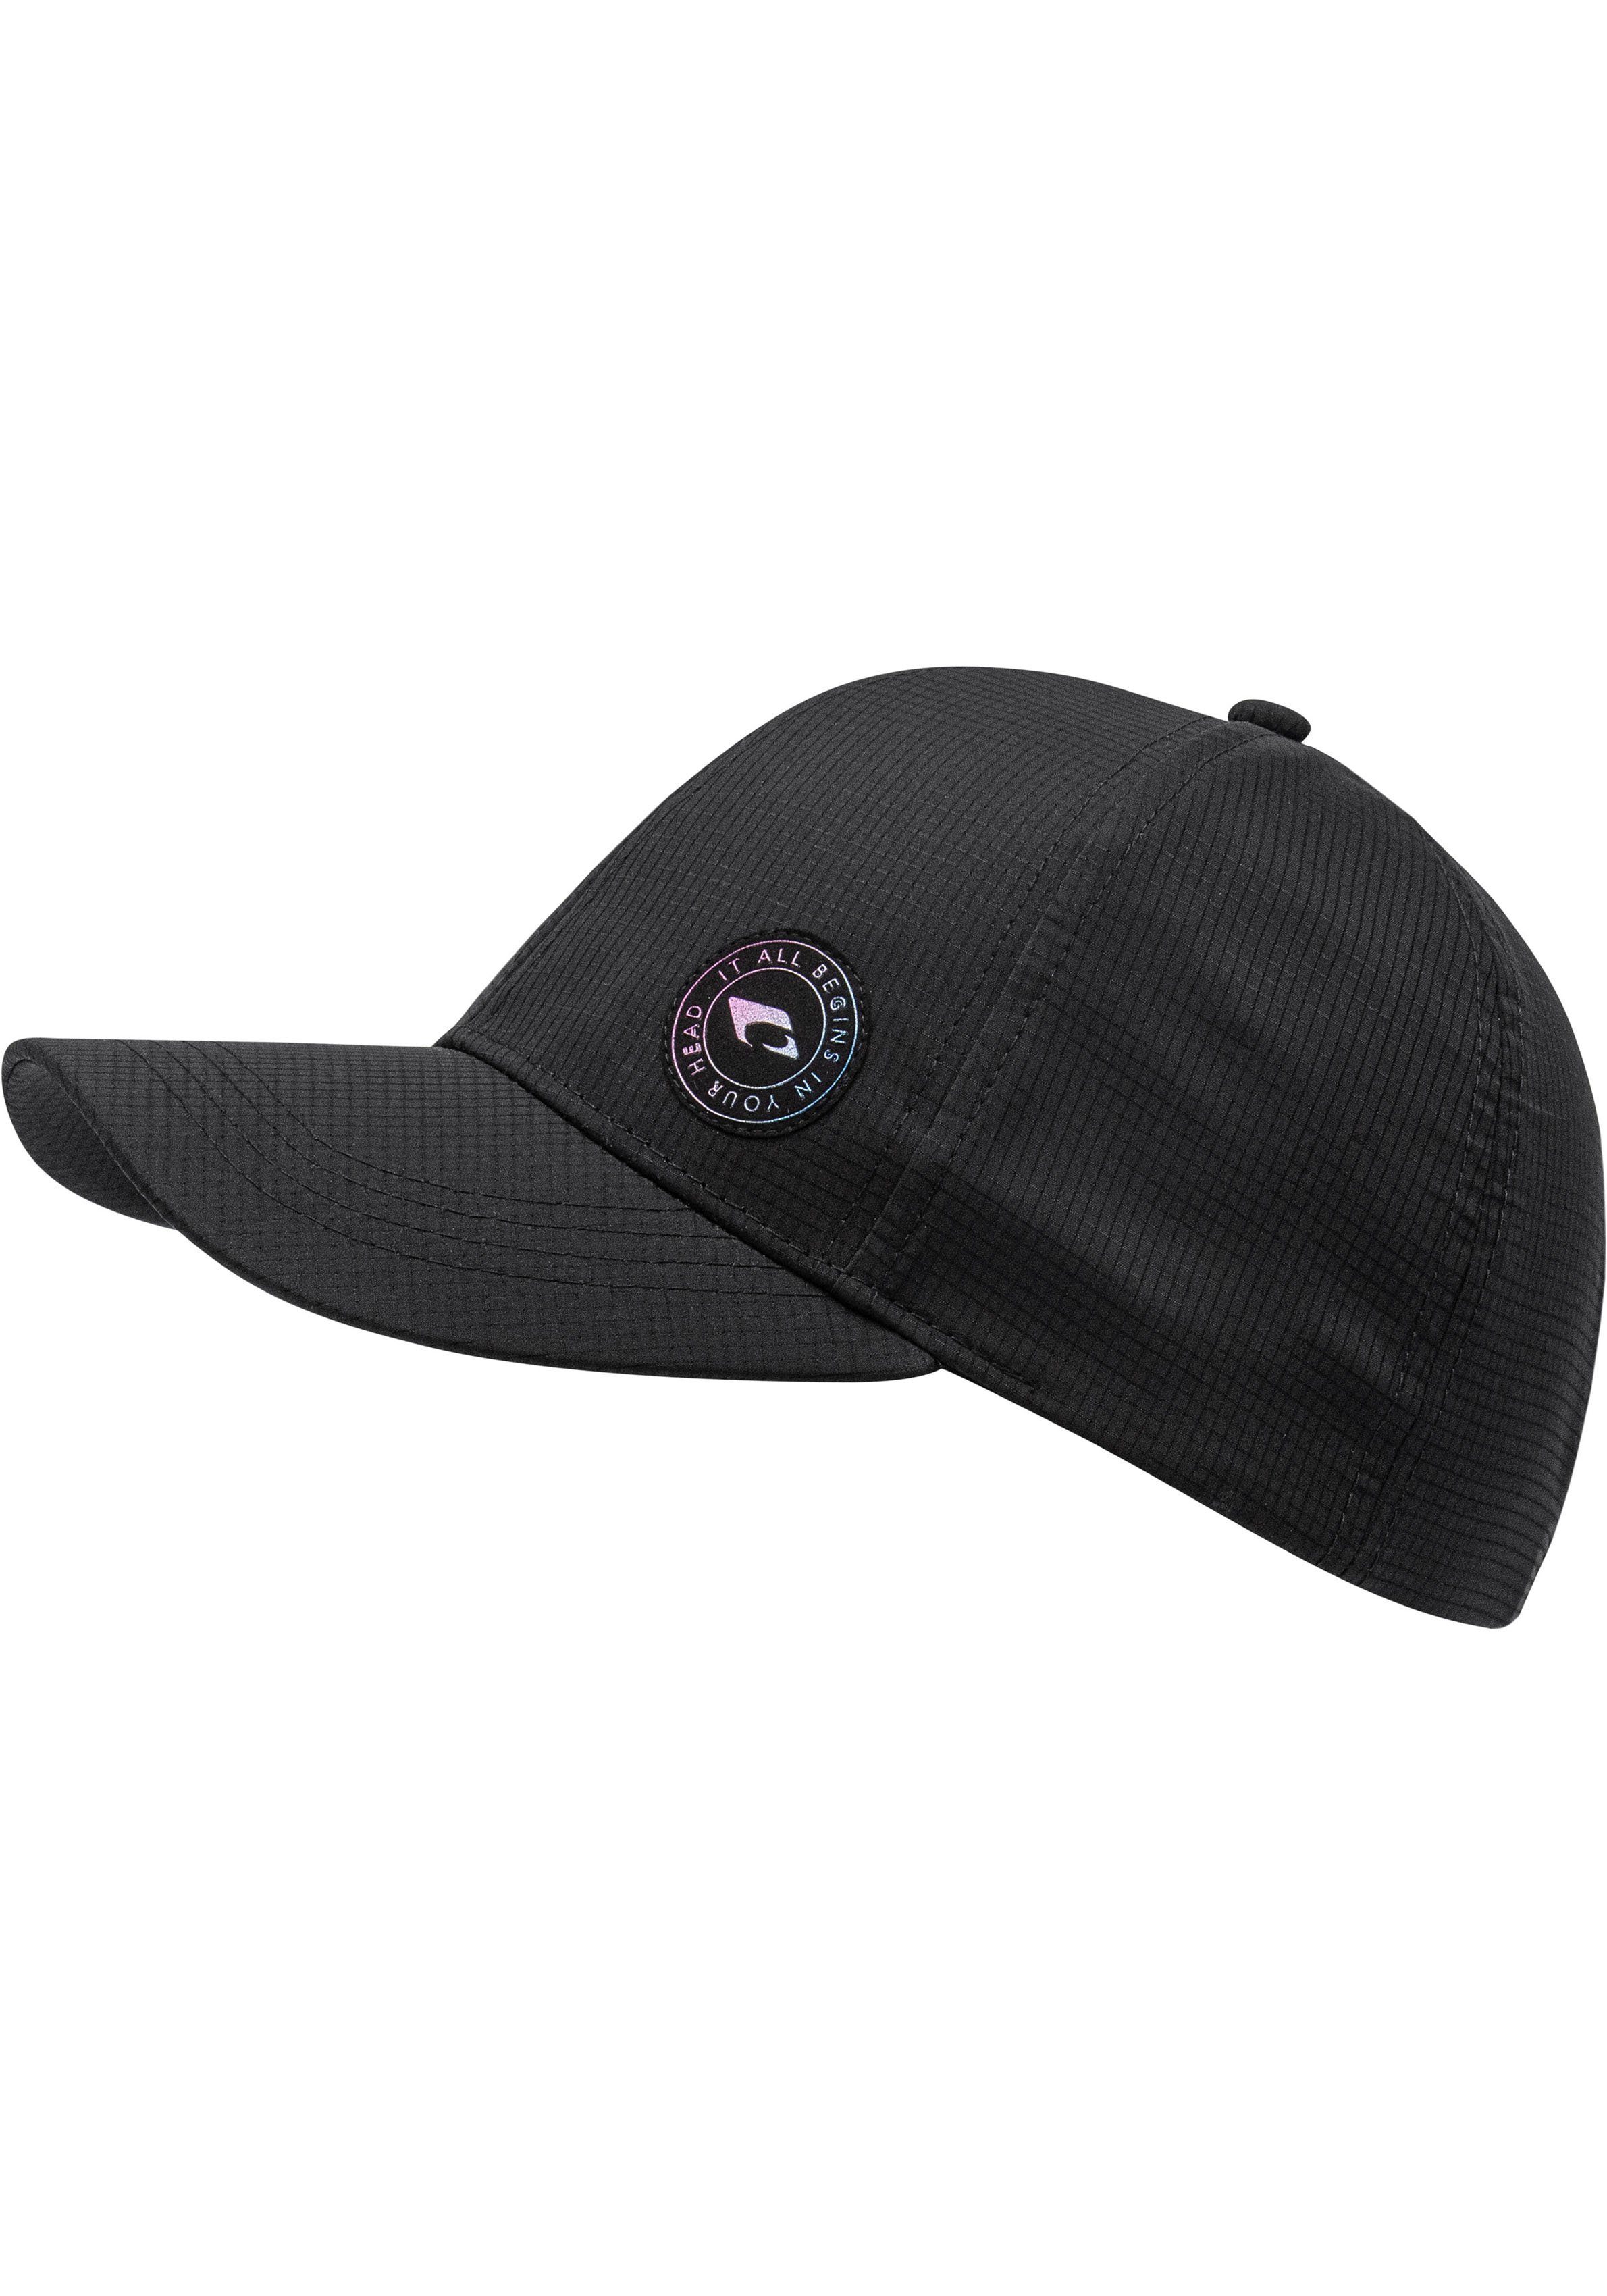 chillouts Baseball Cap schwarz Langley Hat